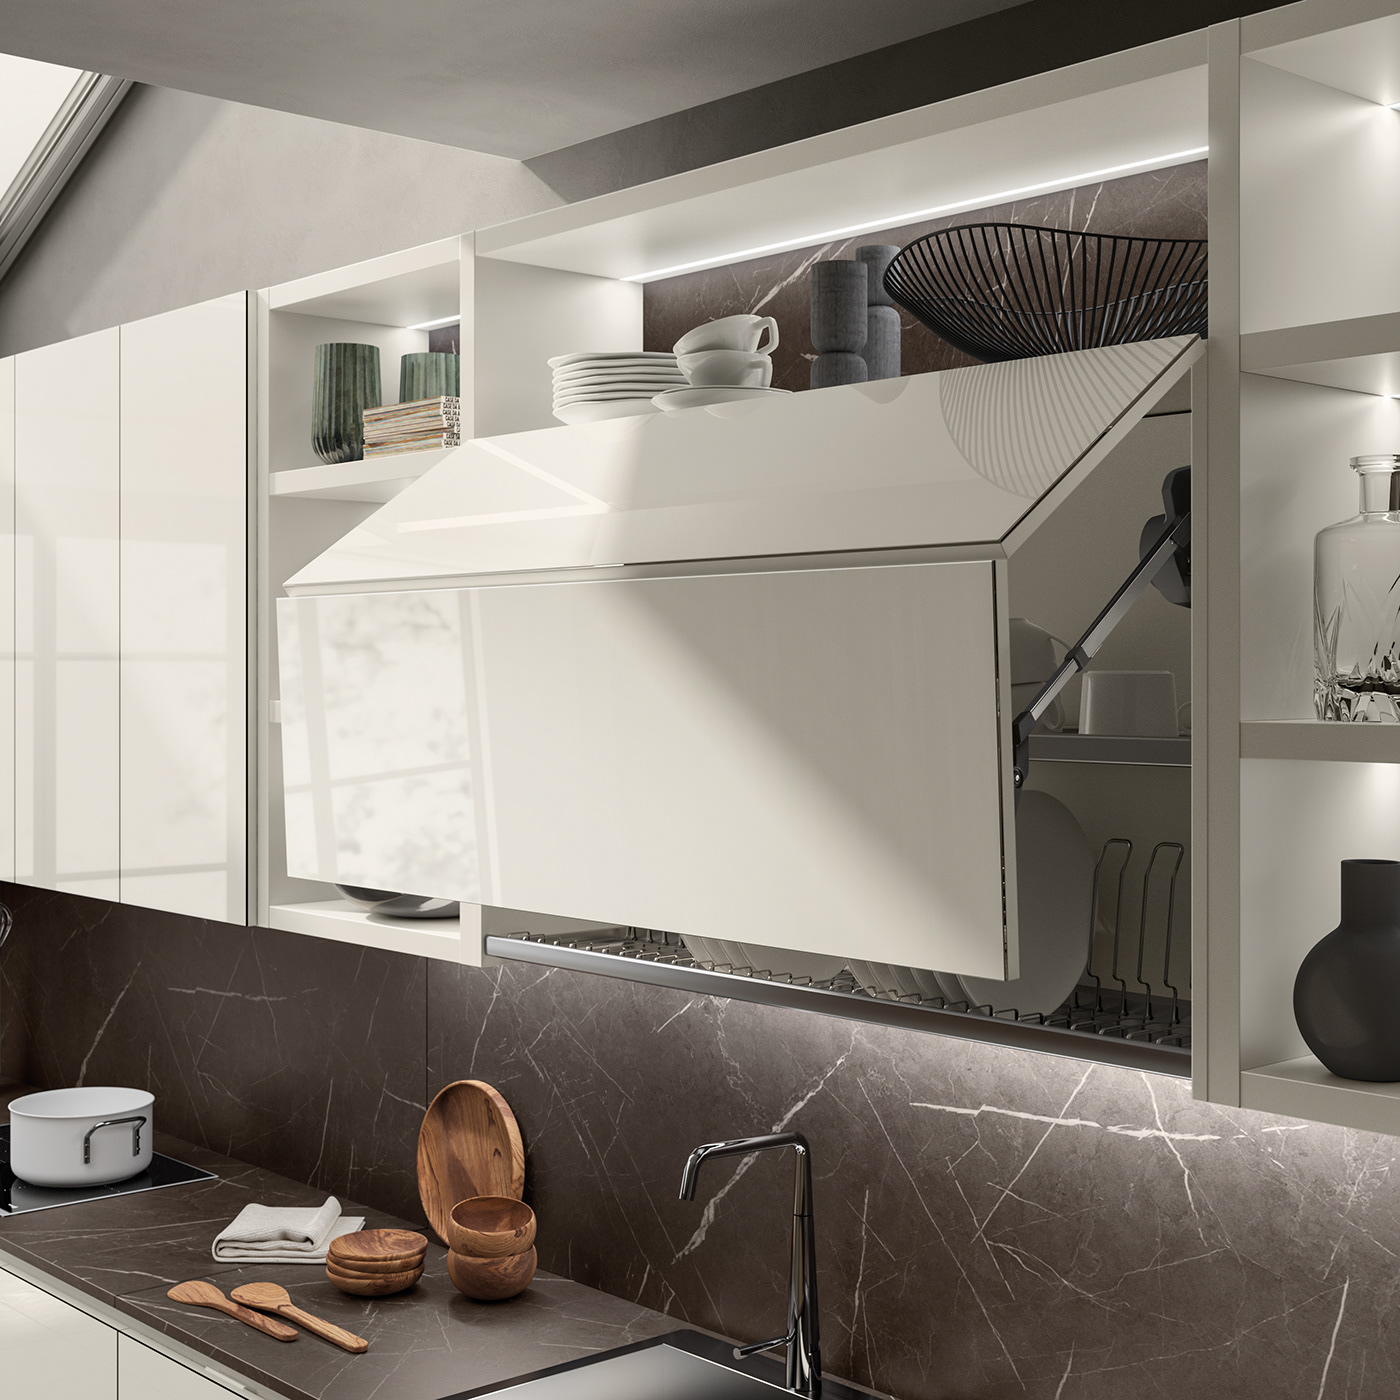 design kitchen Render rendering inspiration 2019 Interior industrial maverick studio podrini living space